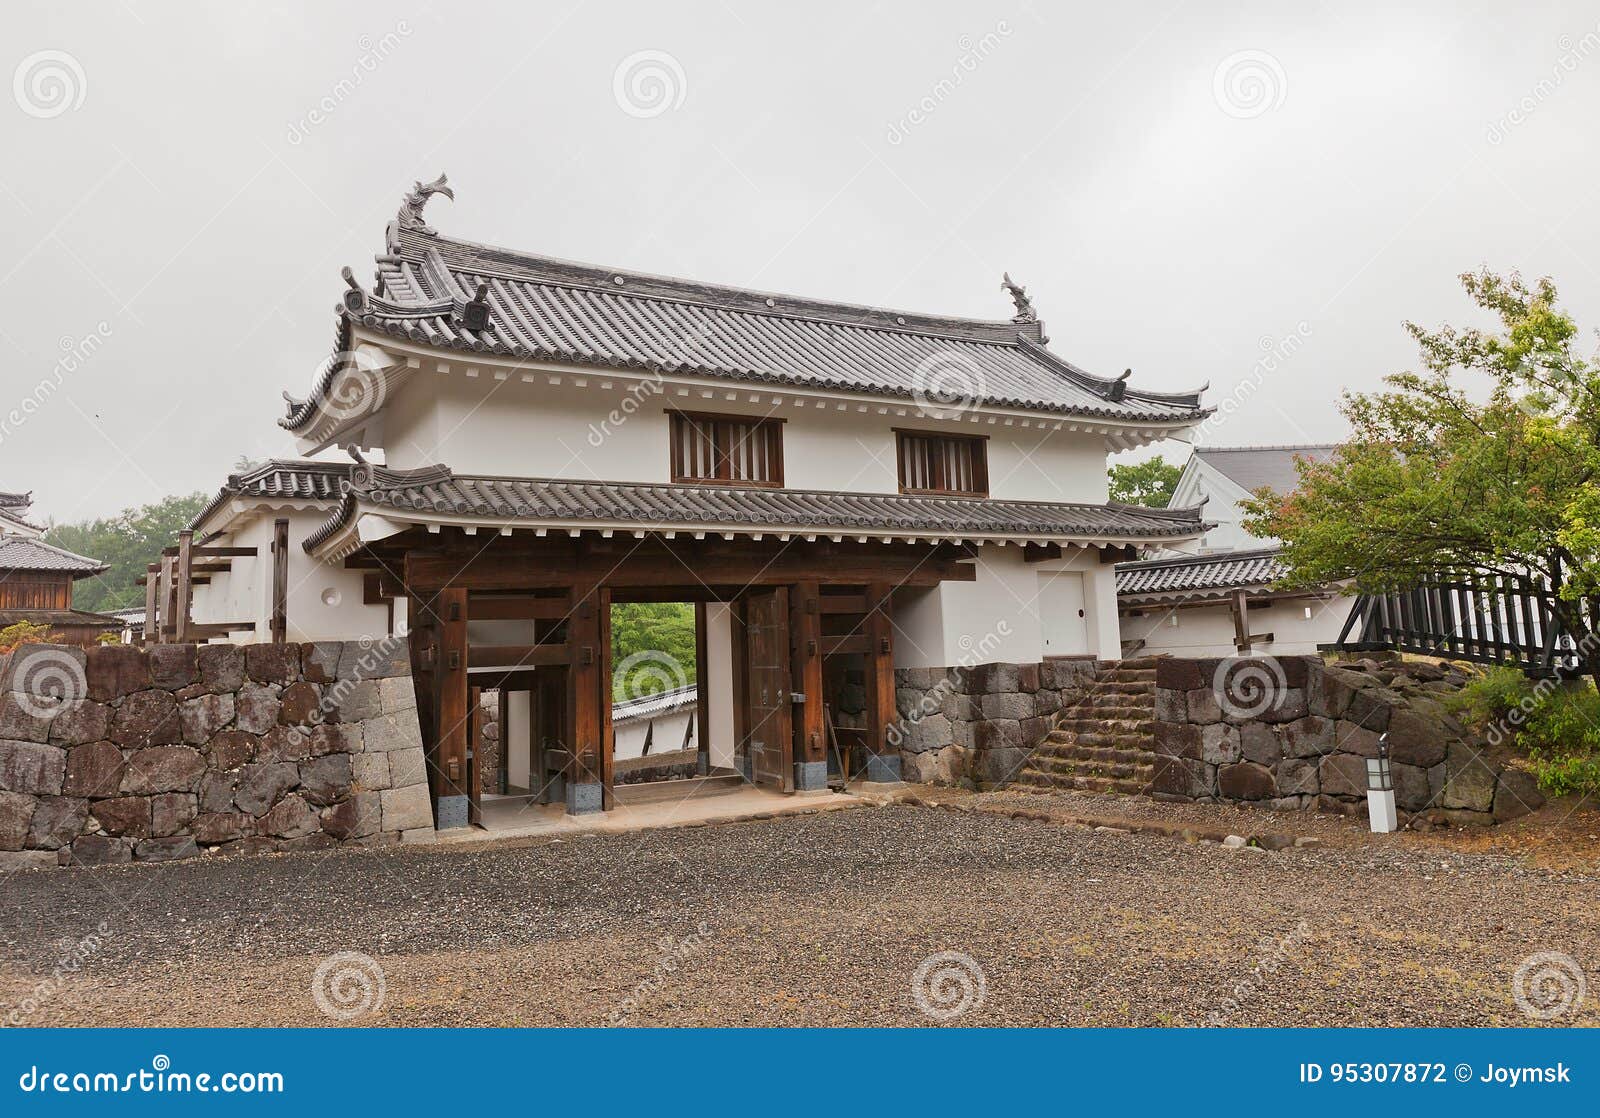 main gate of shiroishi castle, japan